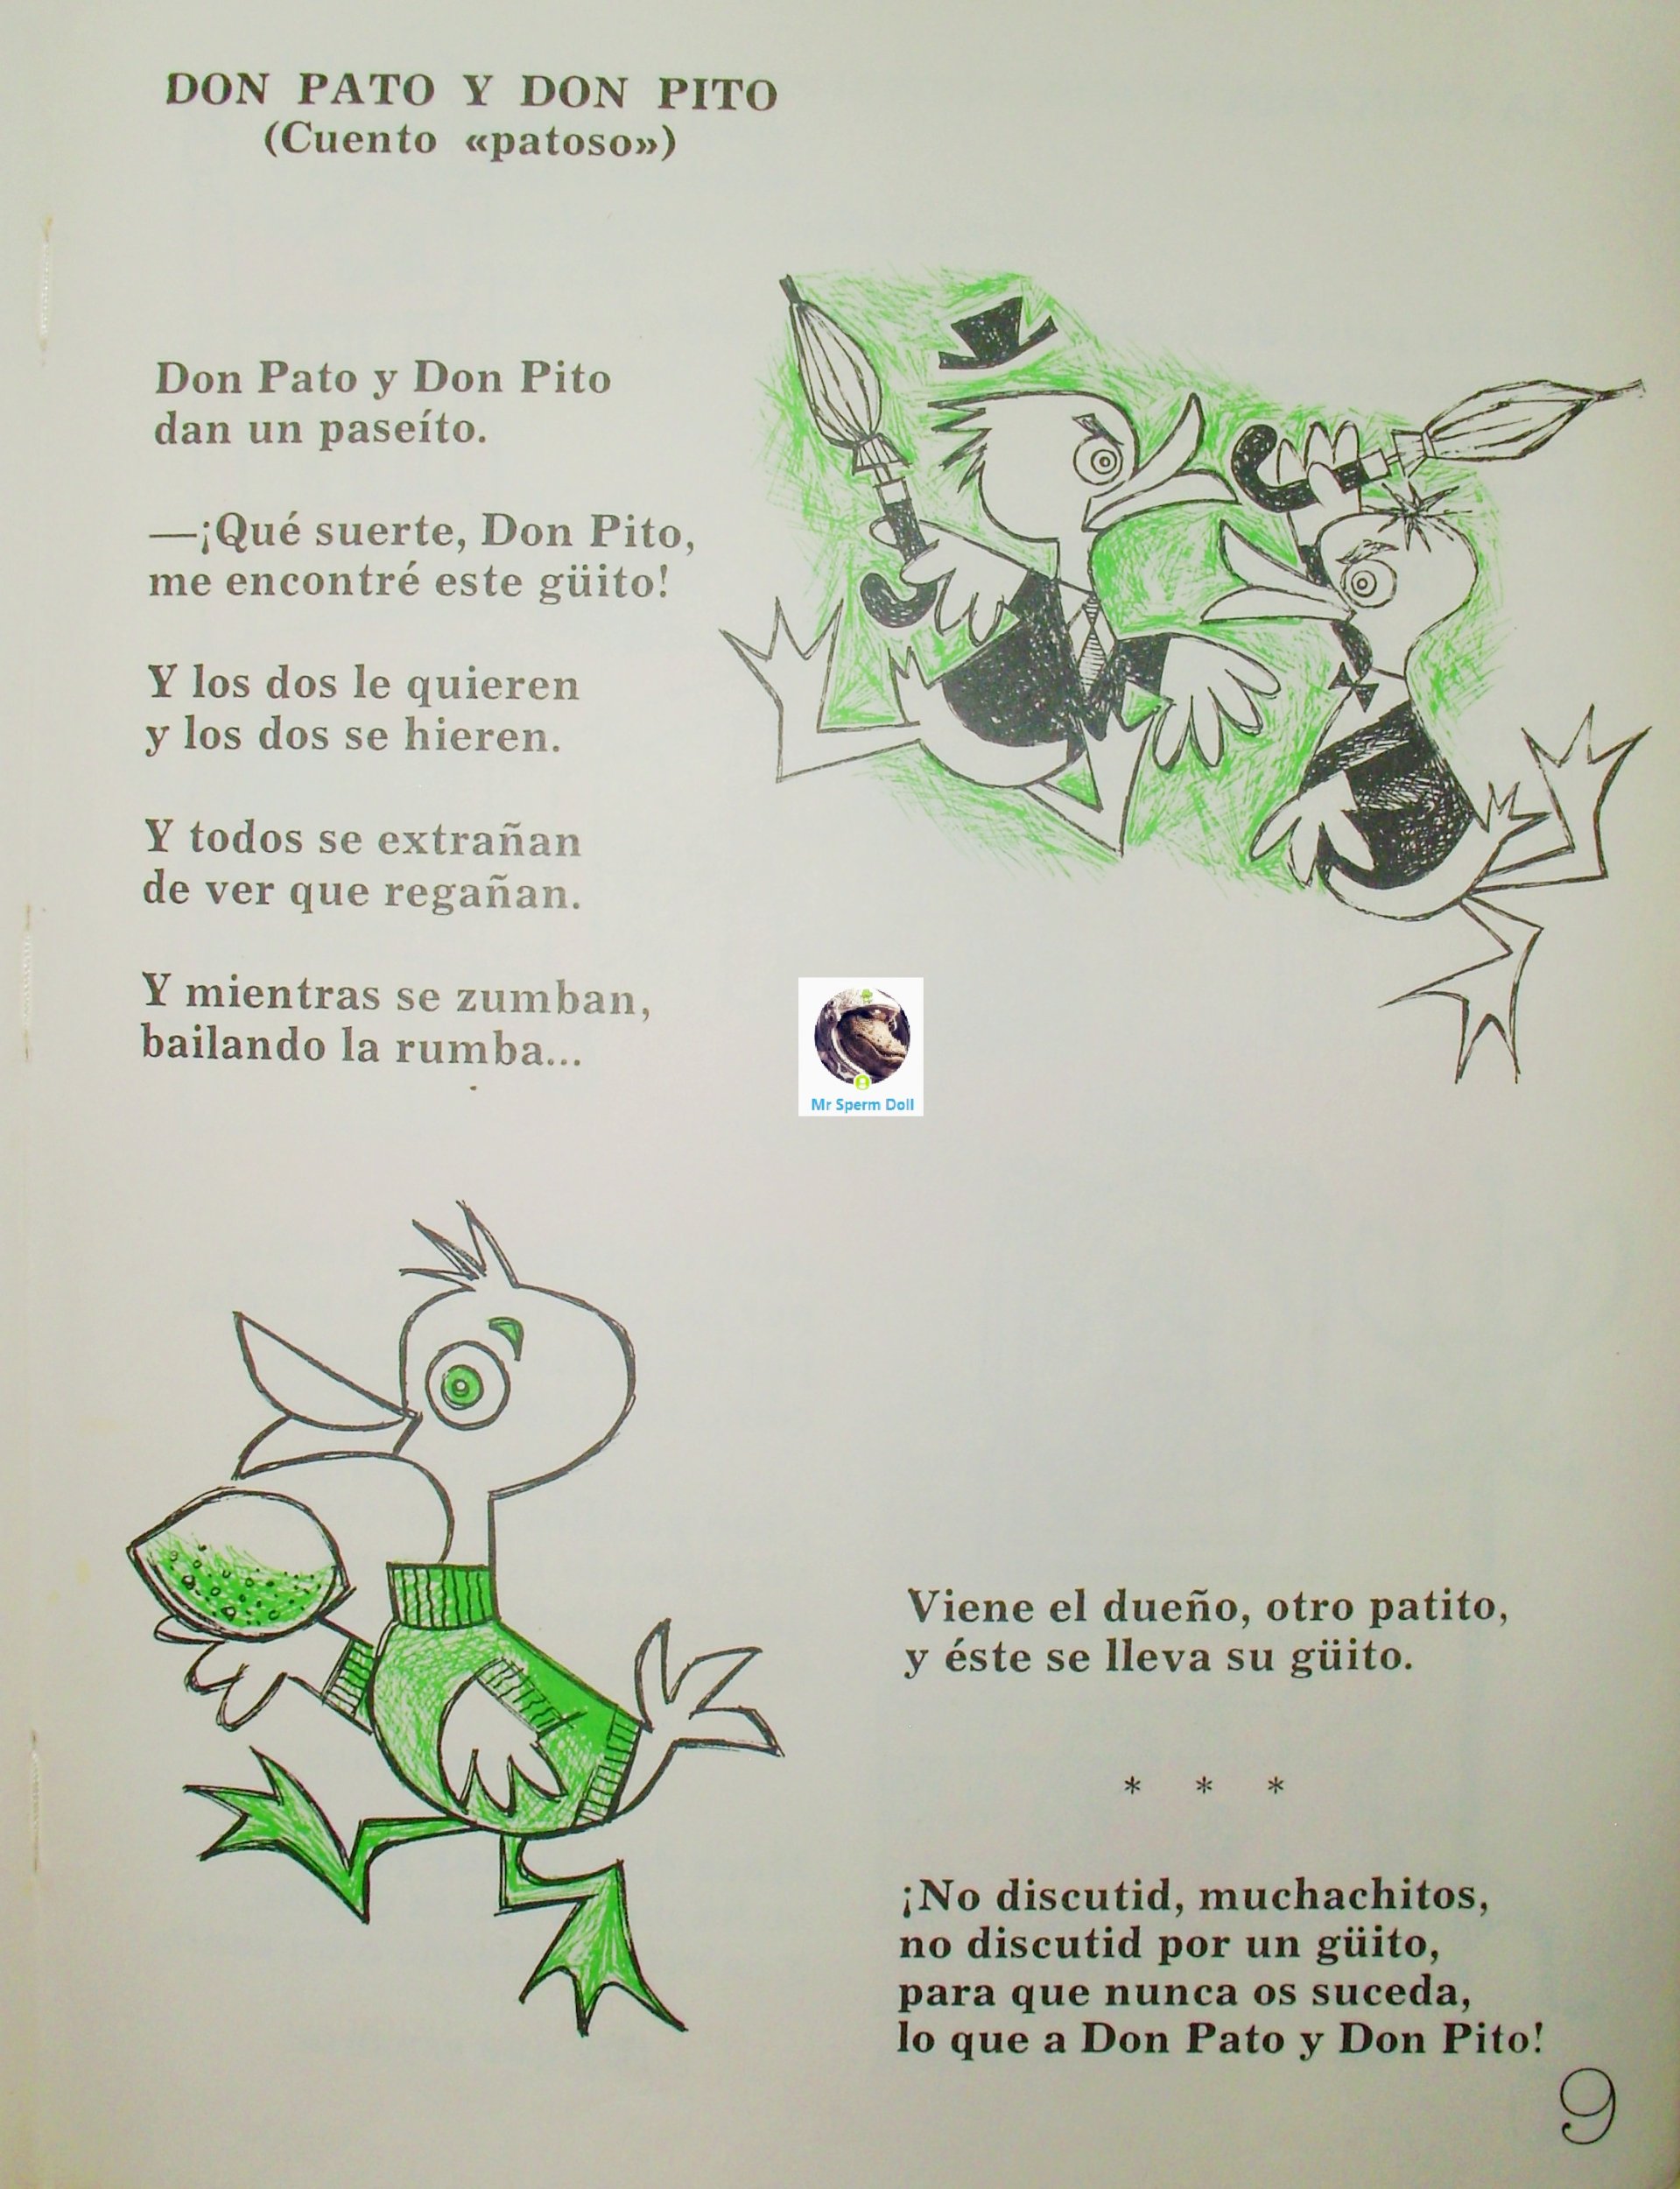 3 Gloria Fuertes Libro Don Pato y Don Pito Mr Sperm Doll.JPG